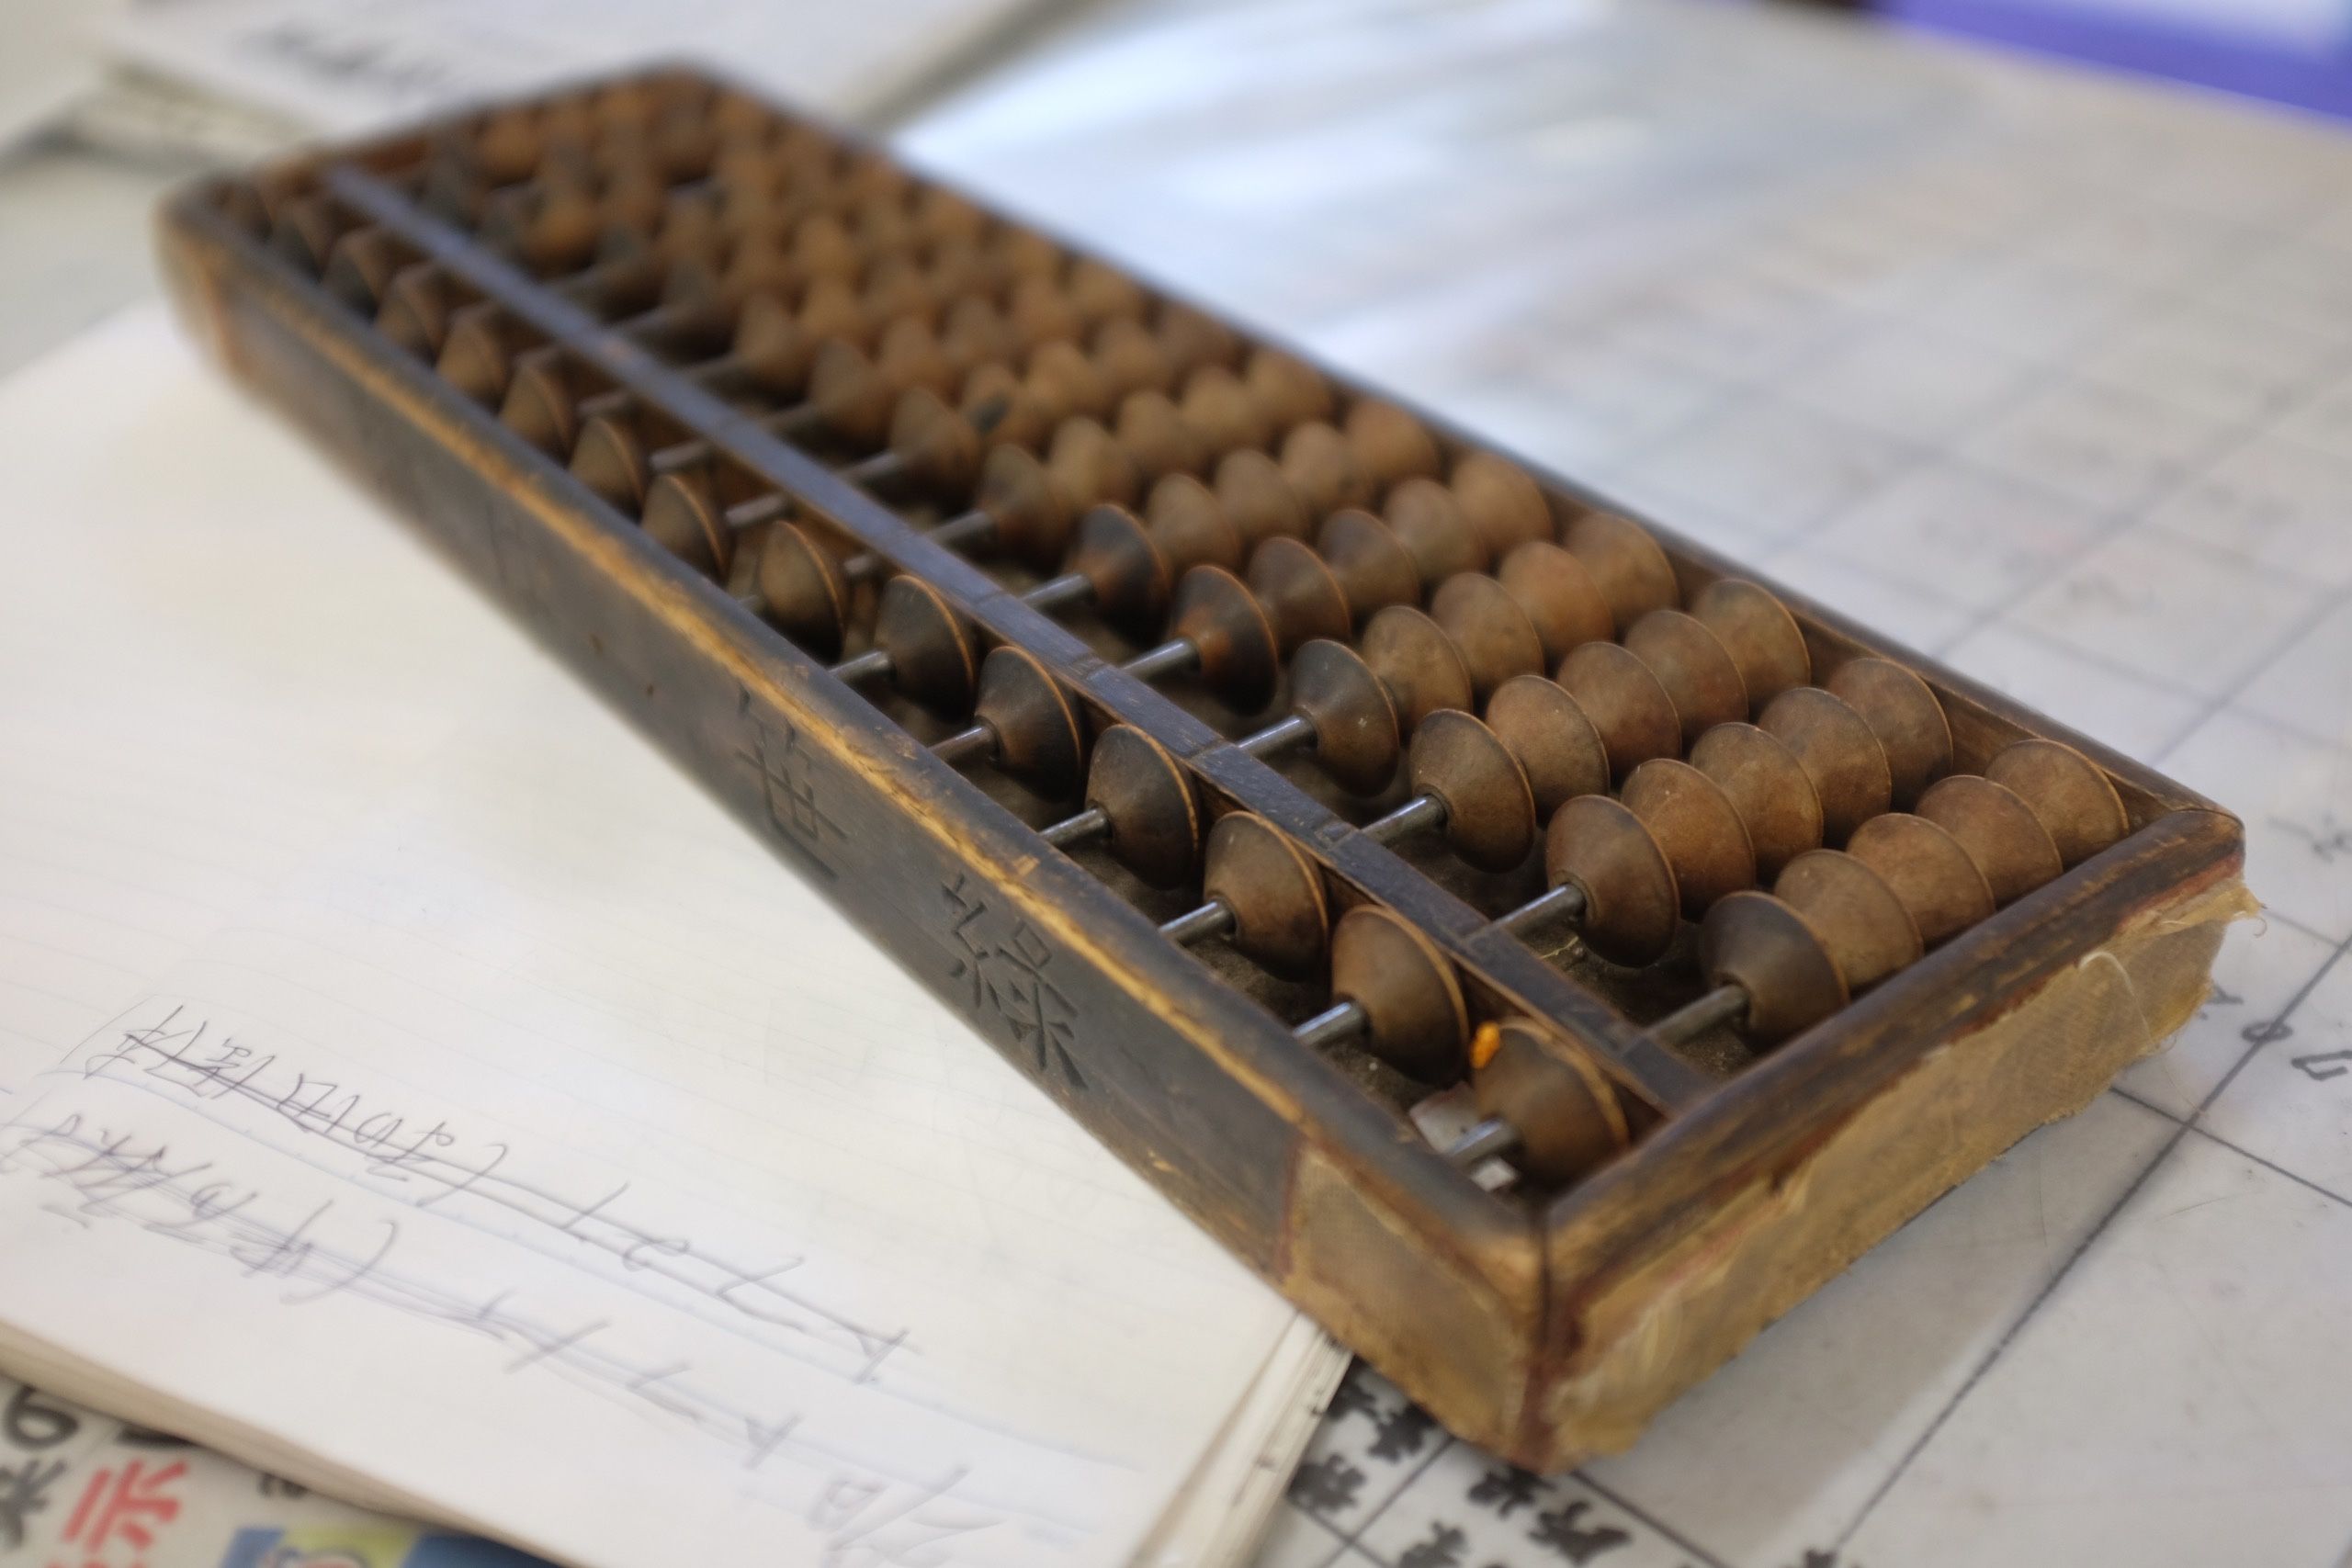 Closeup of a soroban, a Japanese abacus.